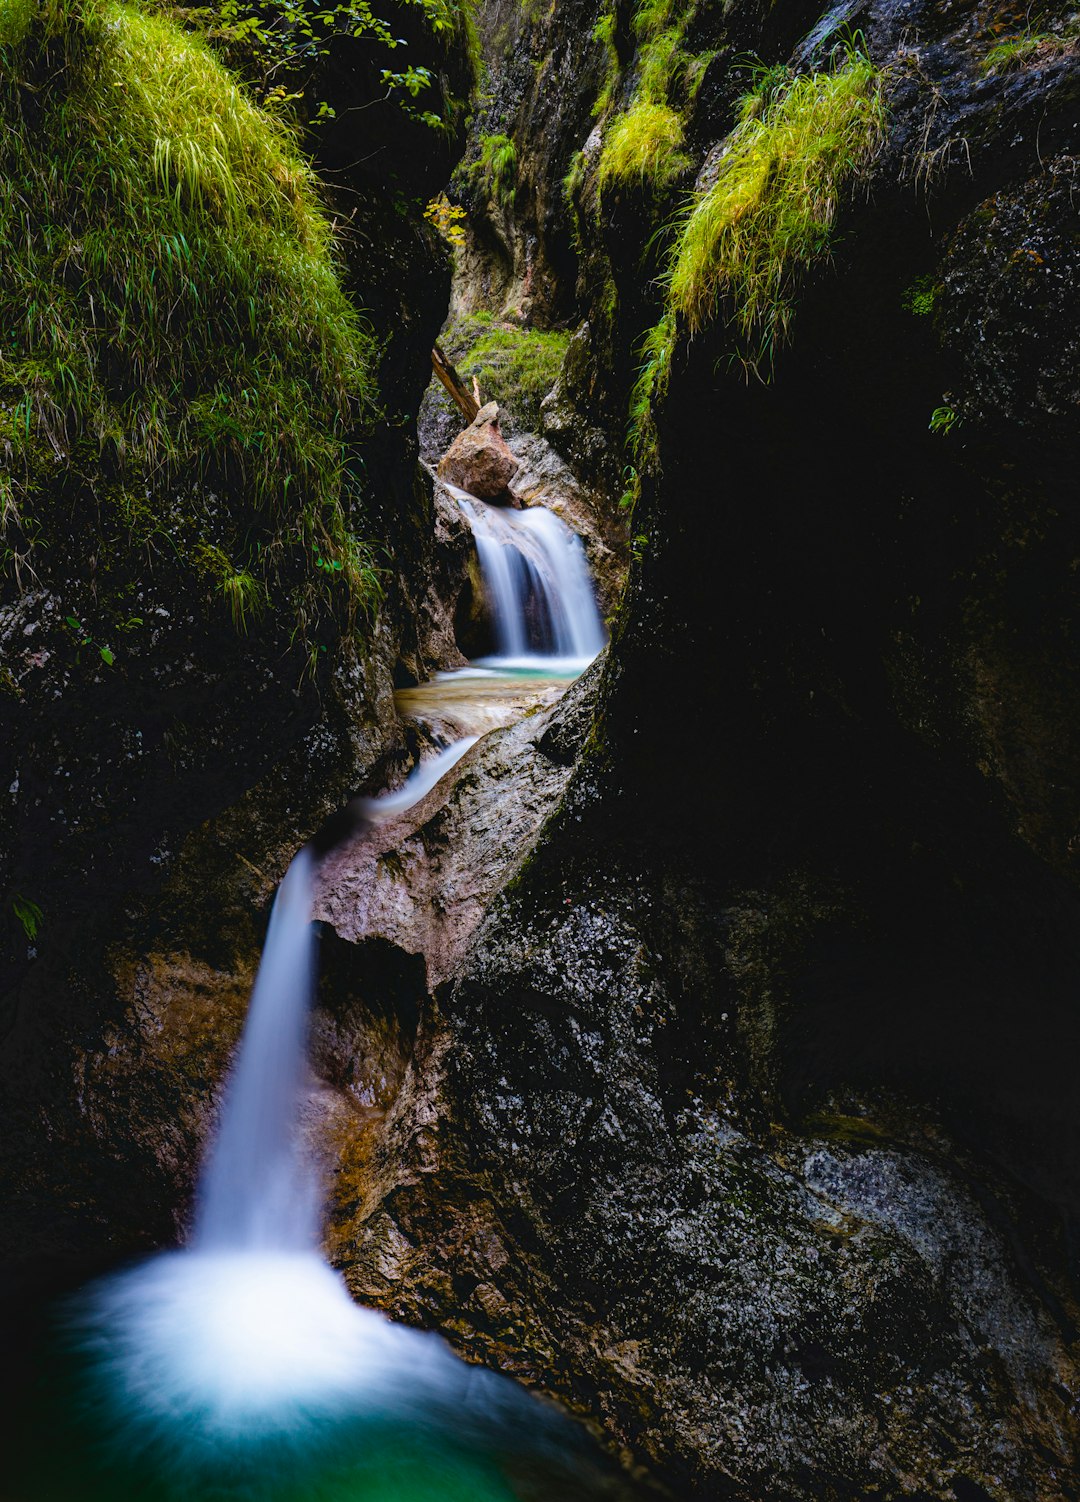 water falls between green moss covered rocks